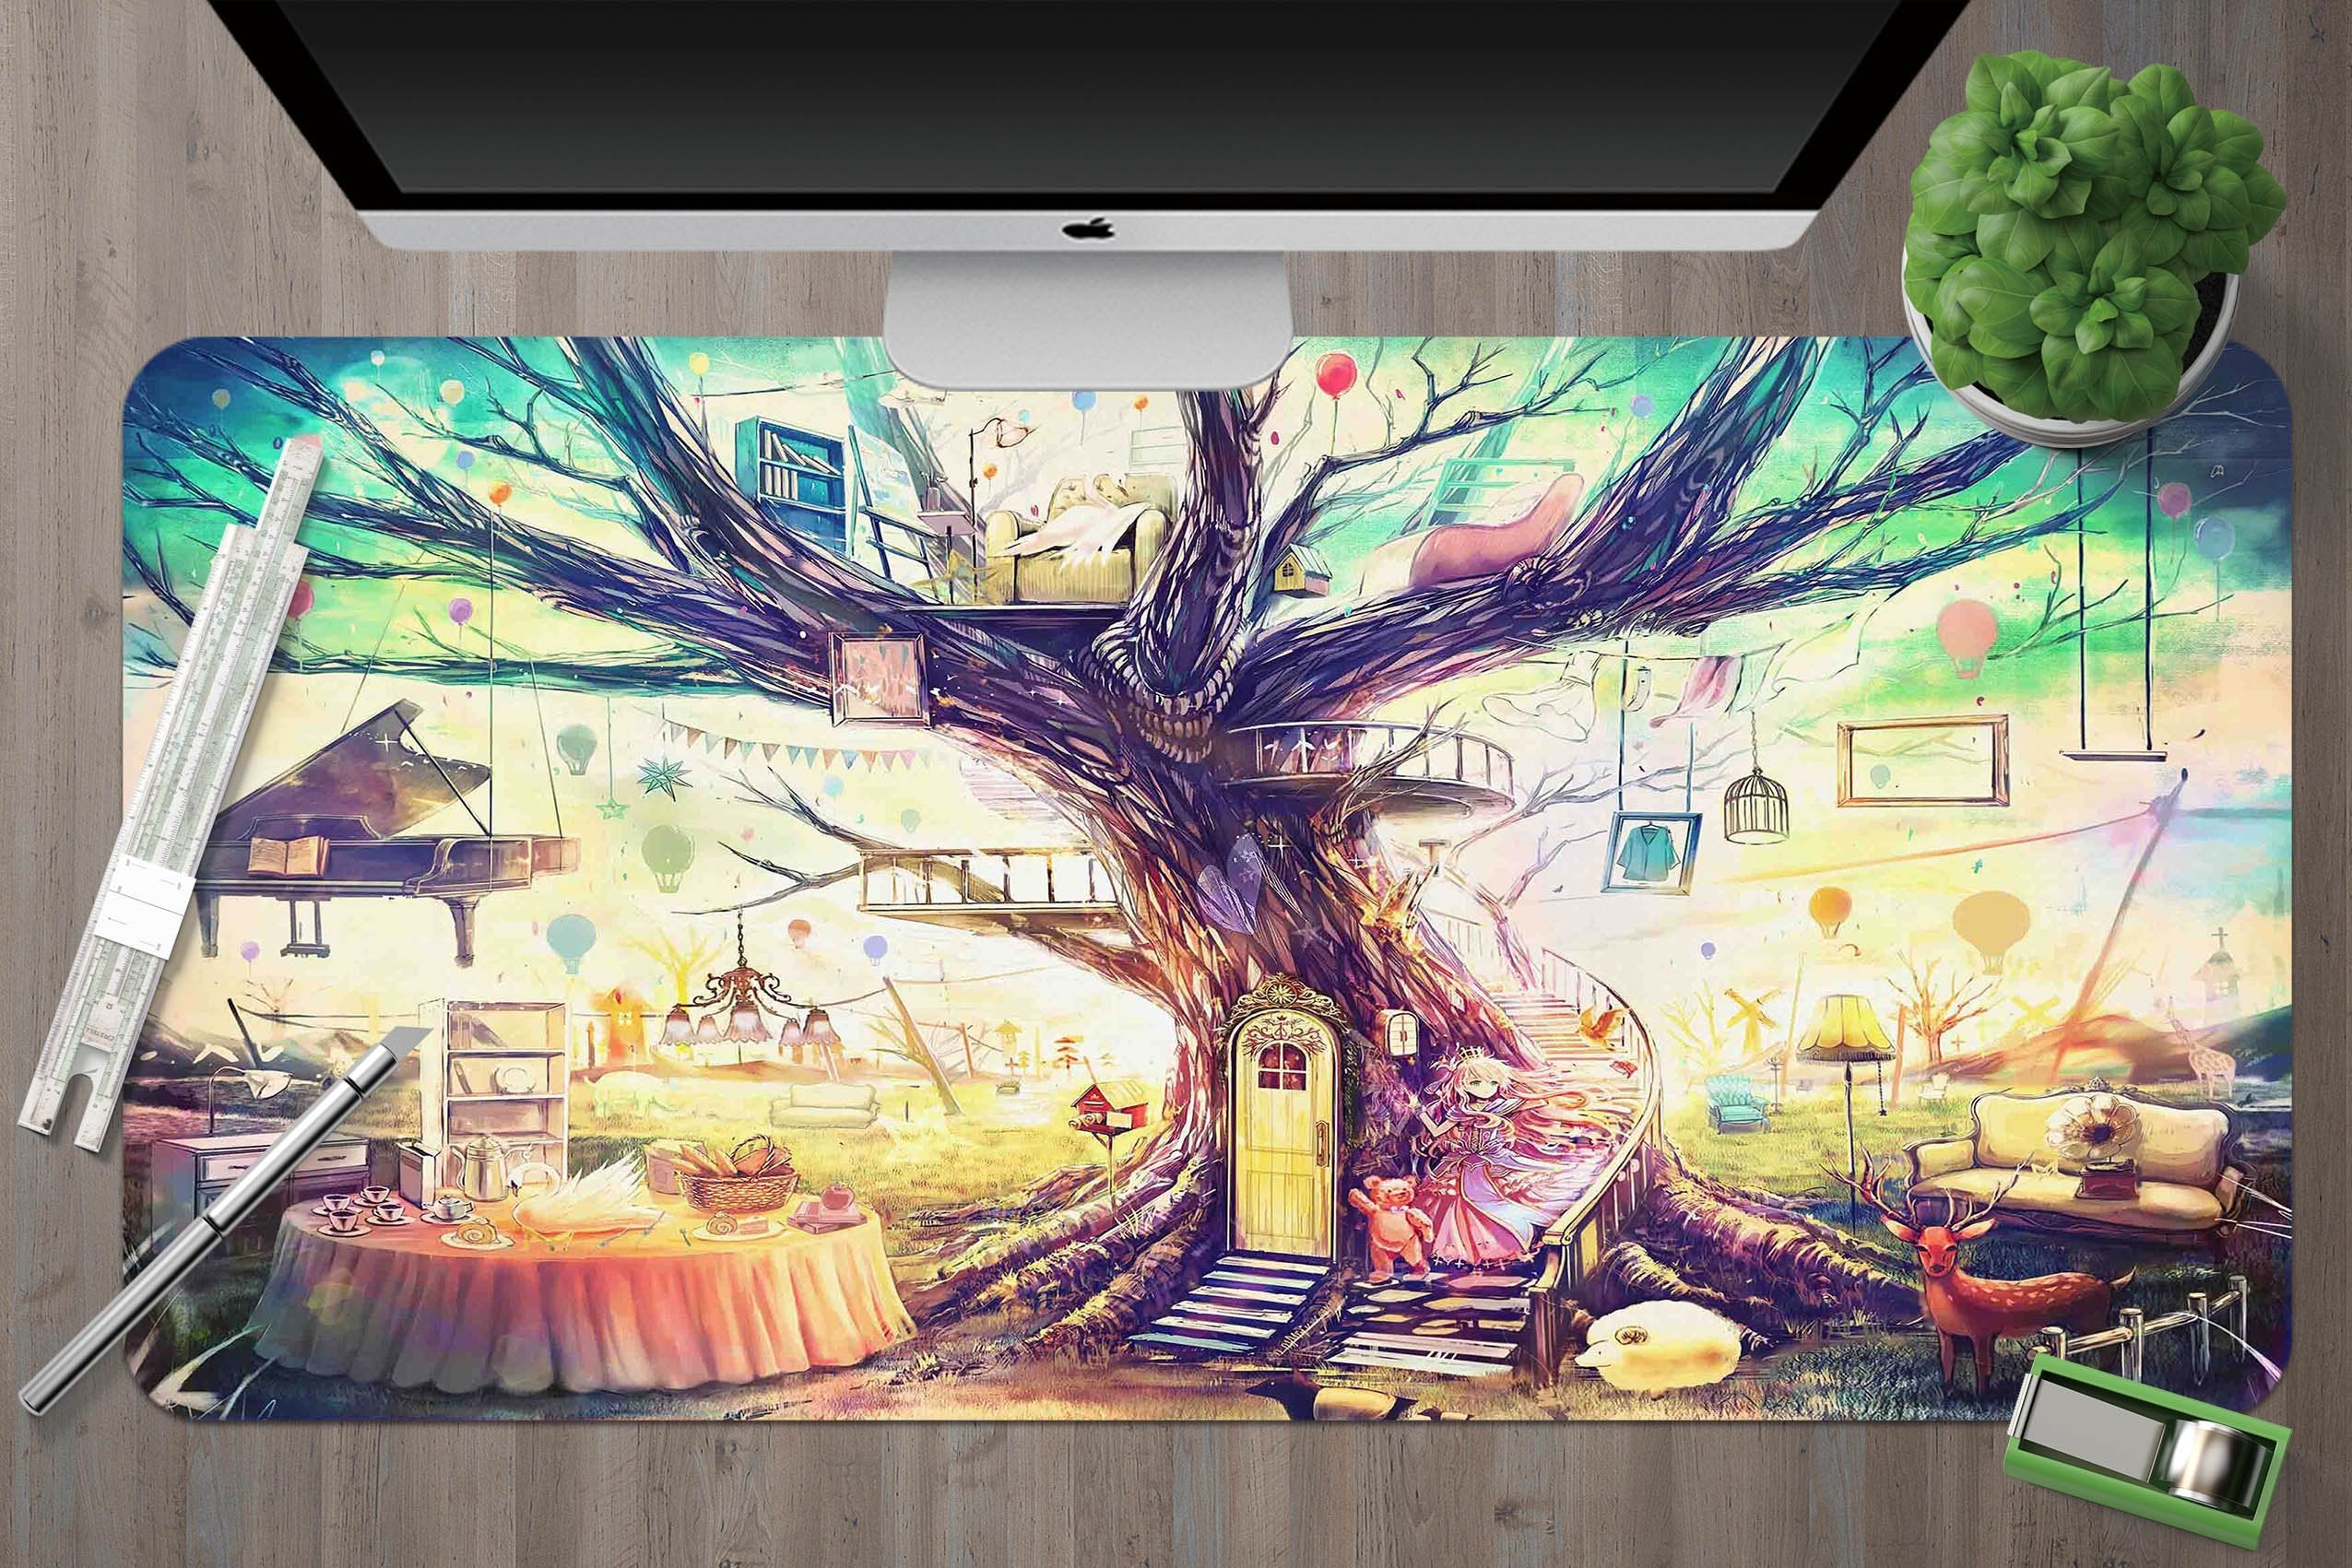 3D Painting Tree 063 Desk Mat Mat AJ Creativity Home 